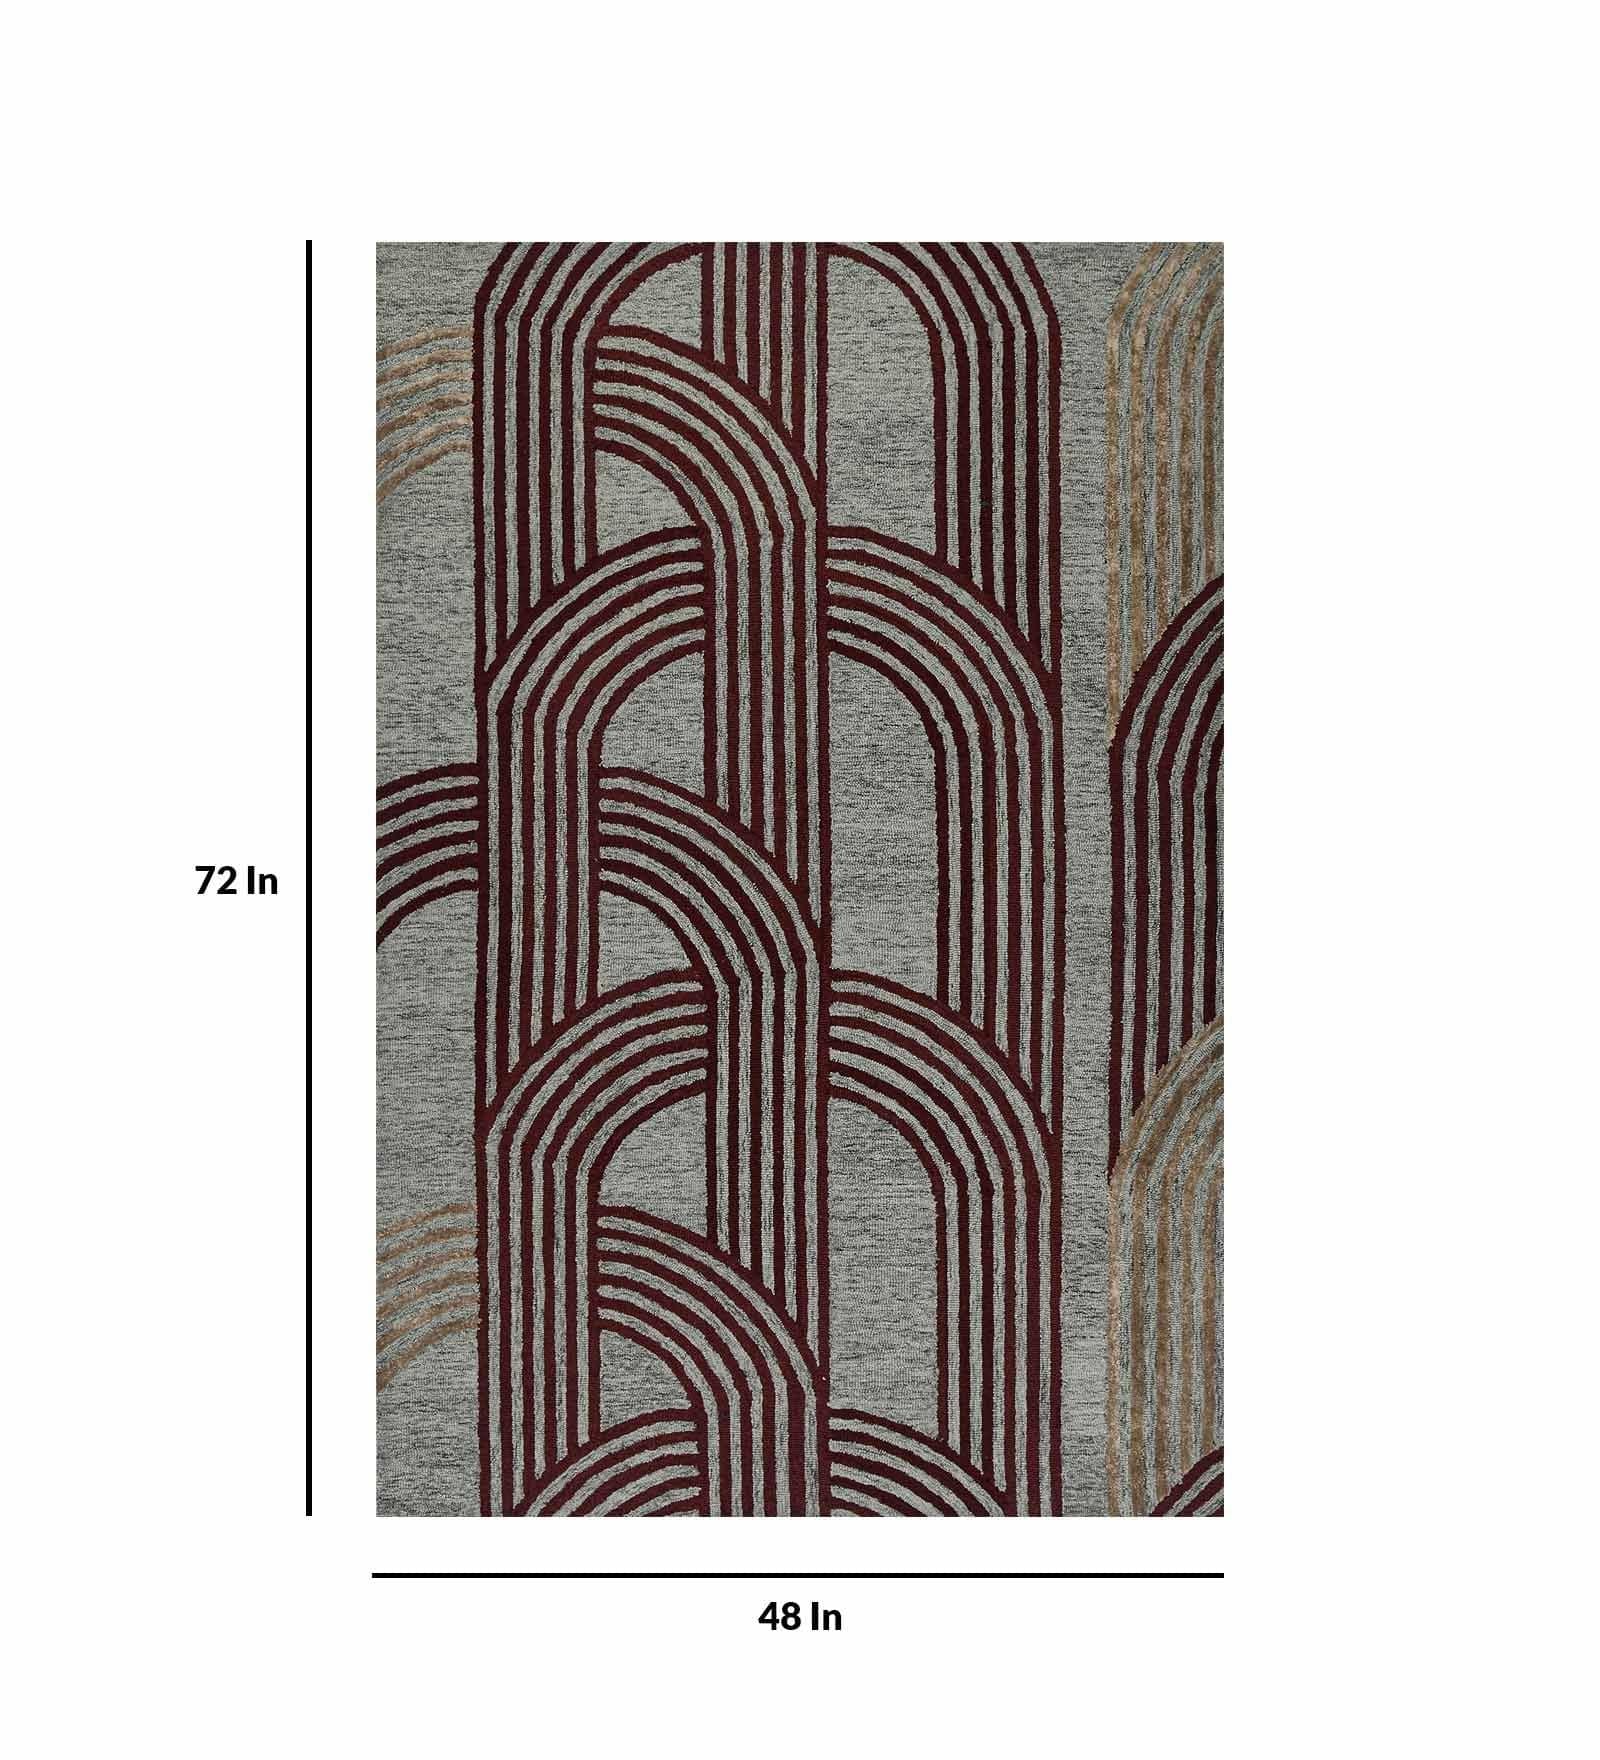 GRAPHITE Wool & Viscose Canyan 4x6 Feet  Hand-Tufted Carpet - Rug